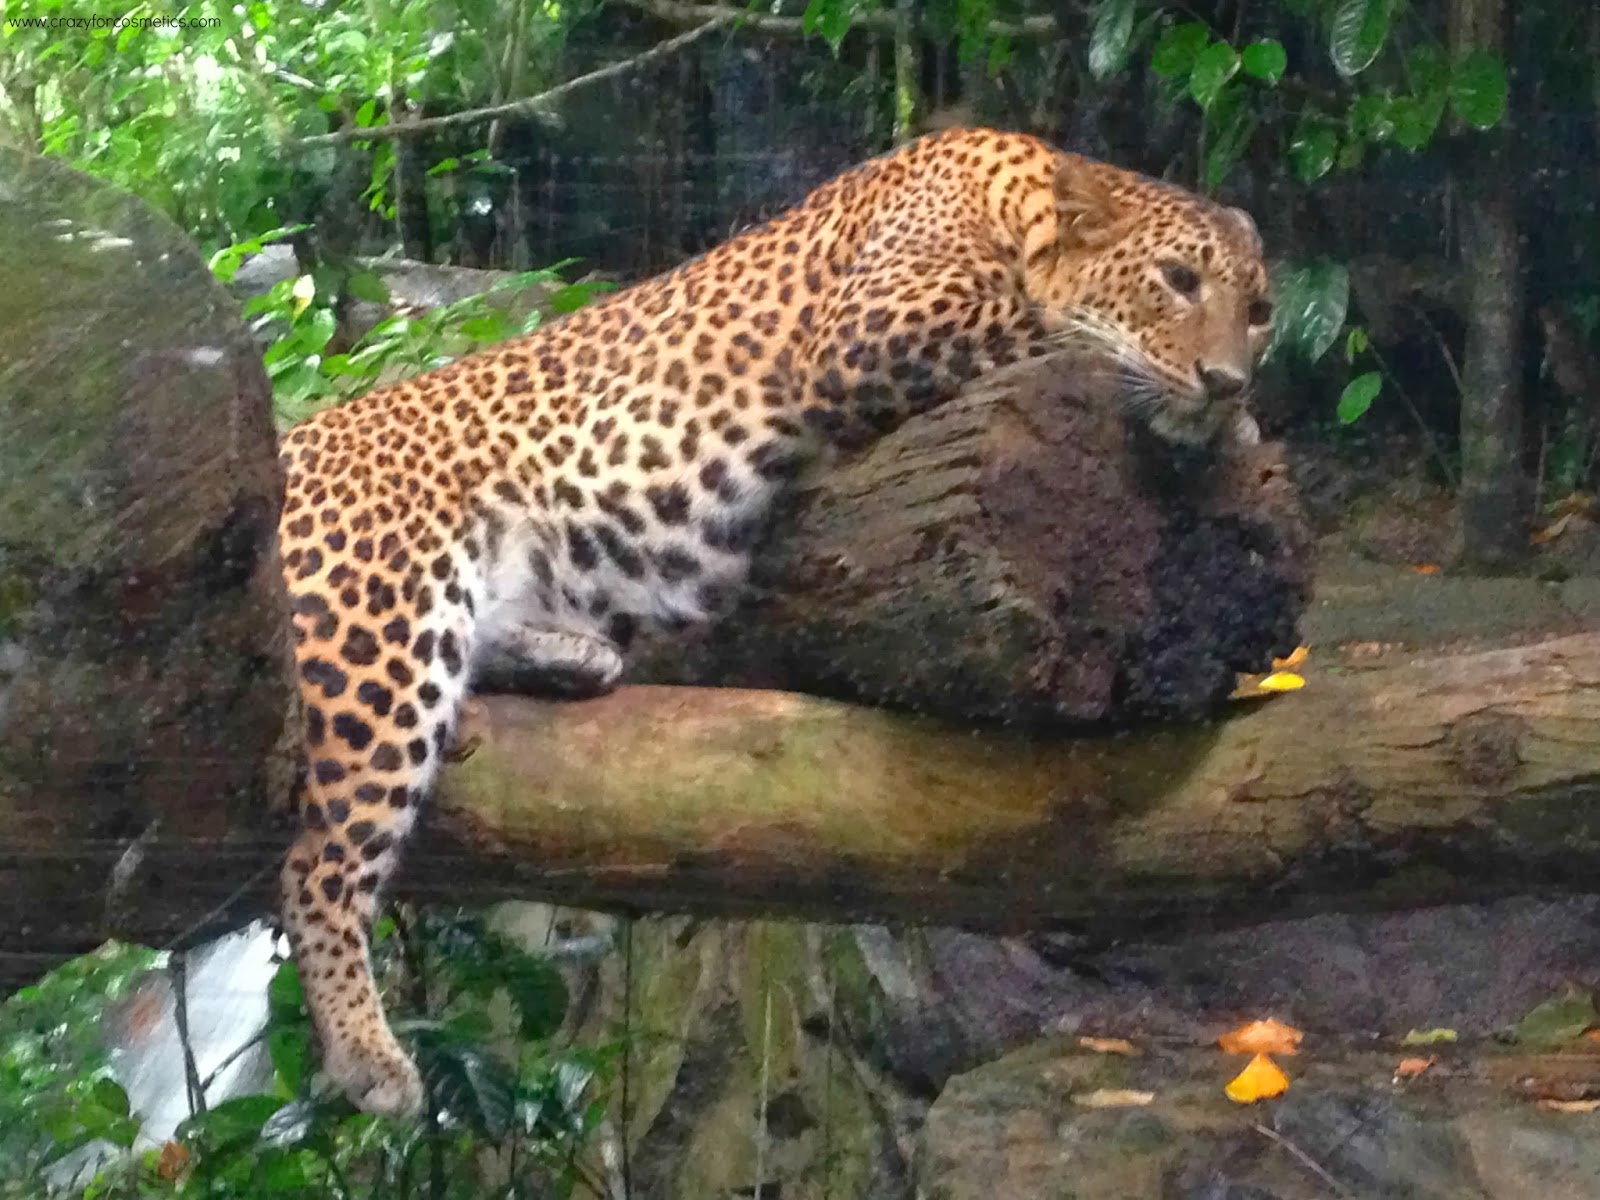 Singapore Zoo Safari-Singapore Zoo review